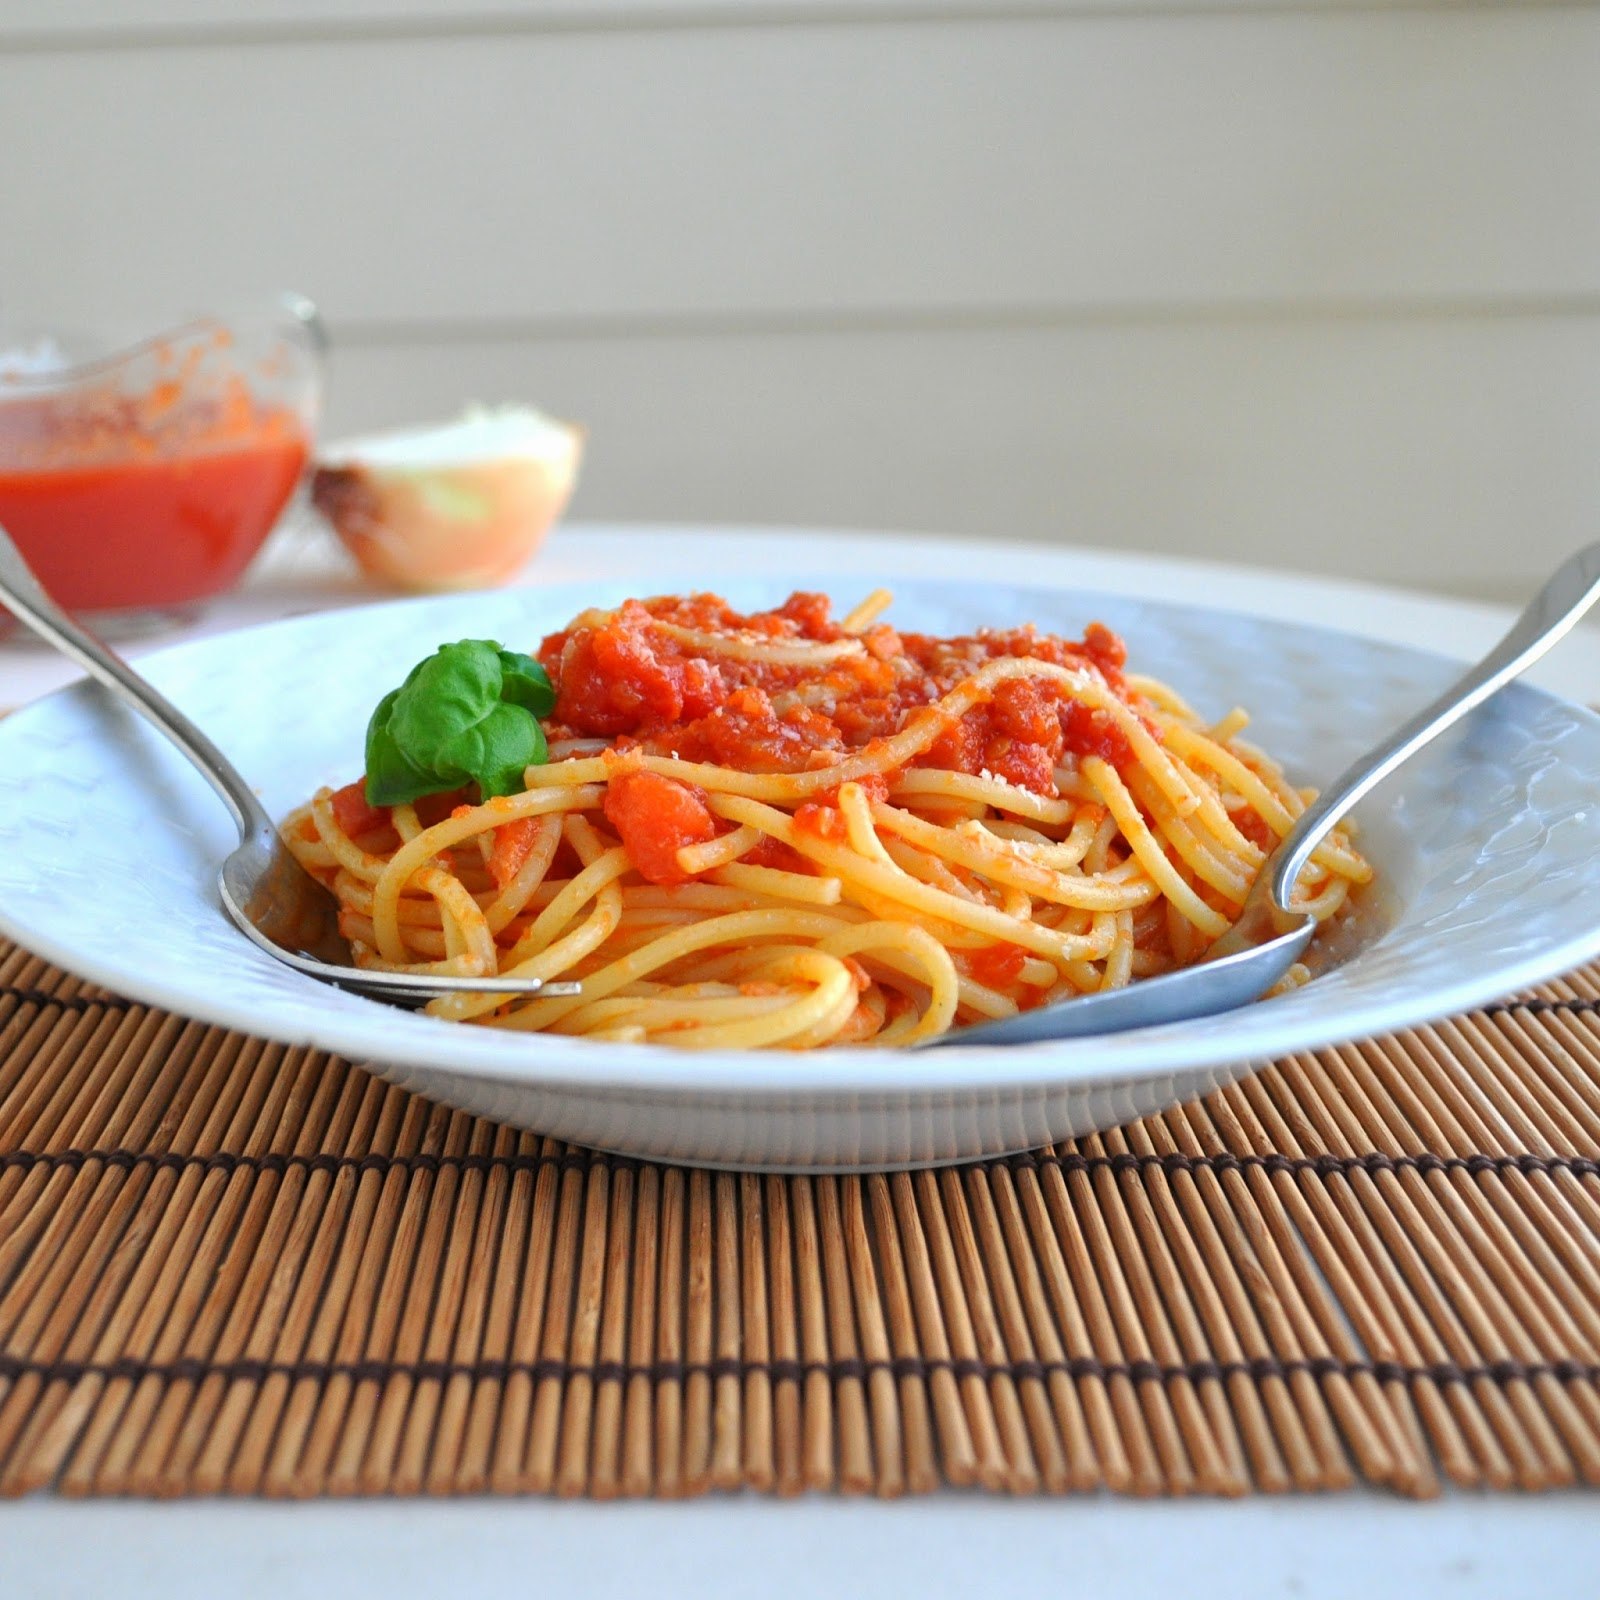 Some spaghetti. Спагетти неаполитано. Паста неаполитано. Макароны неаполитано. Макароны паста неаполитано.